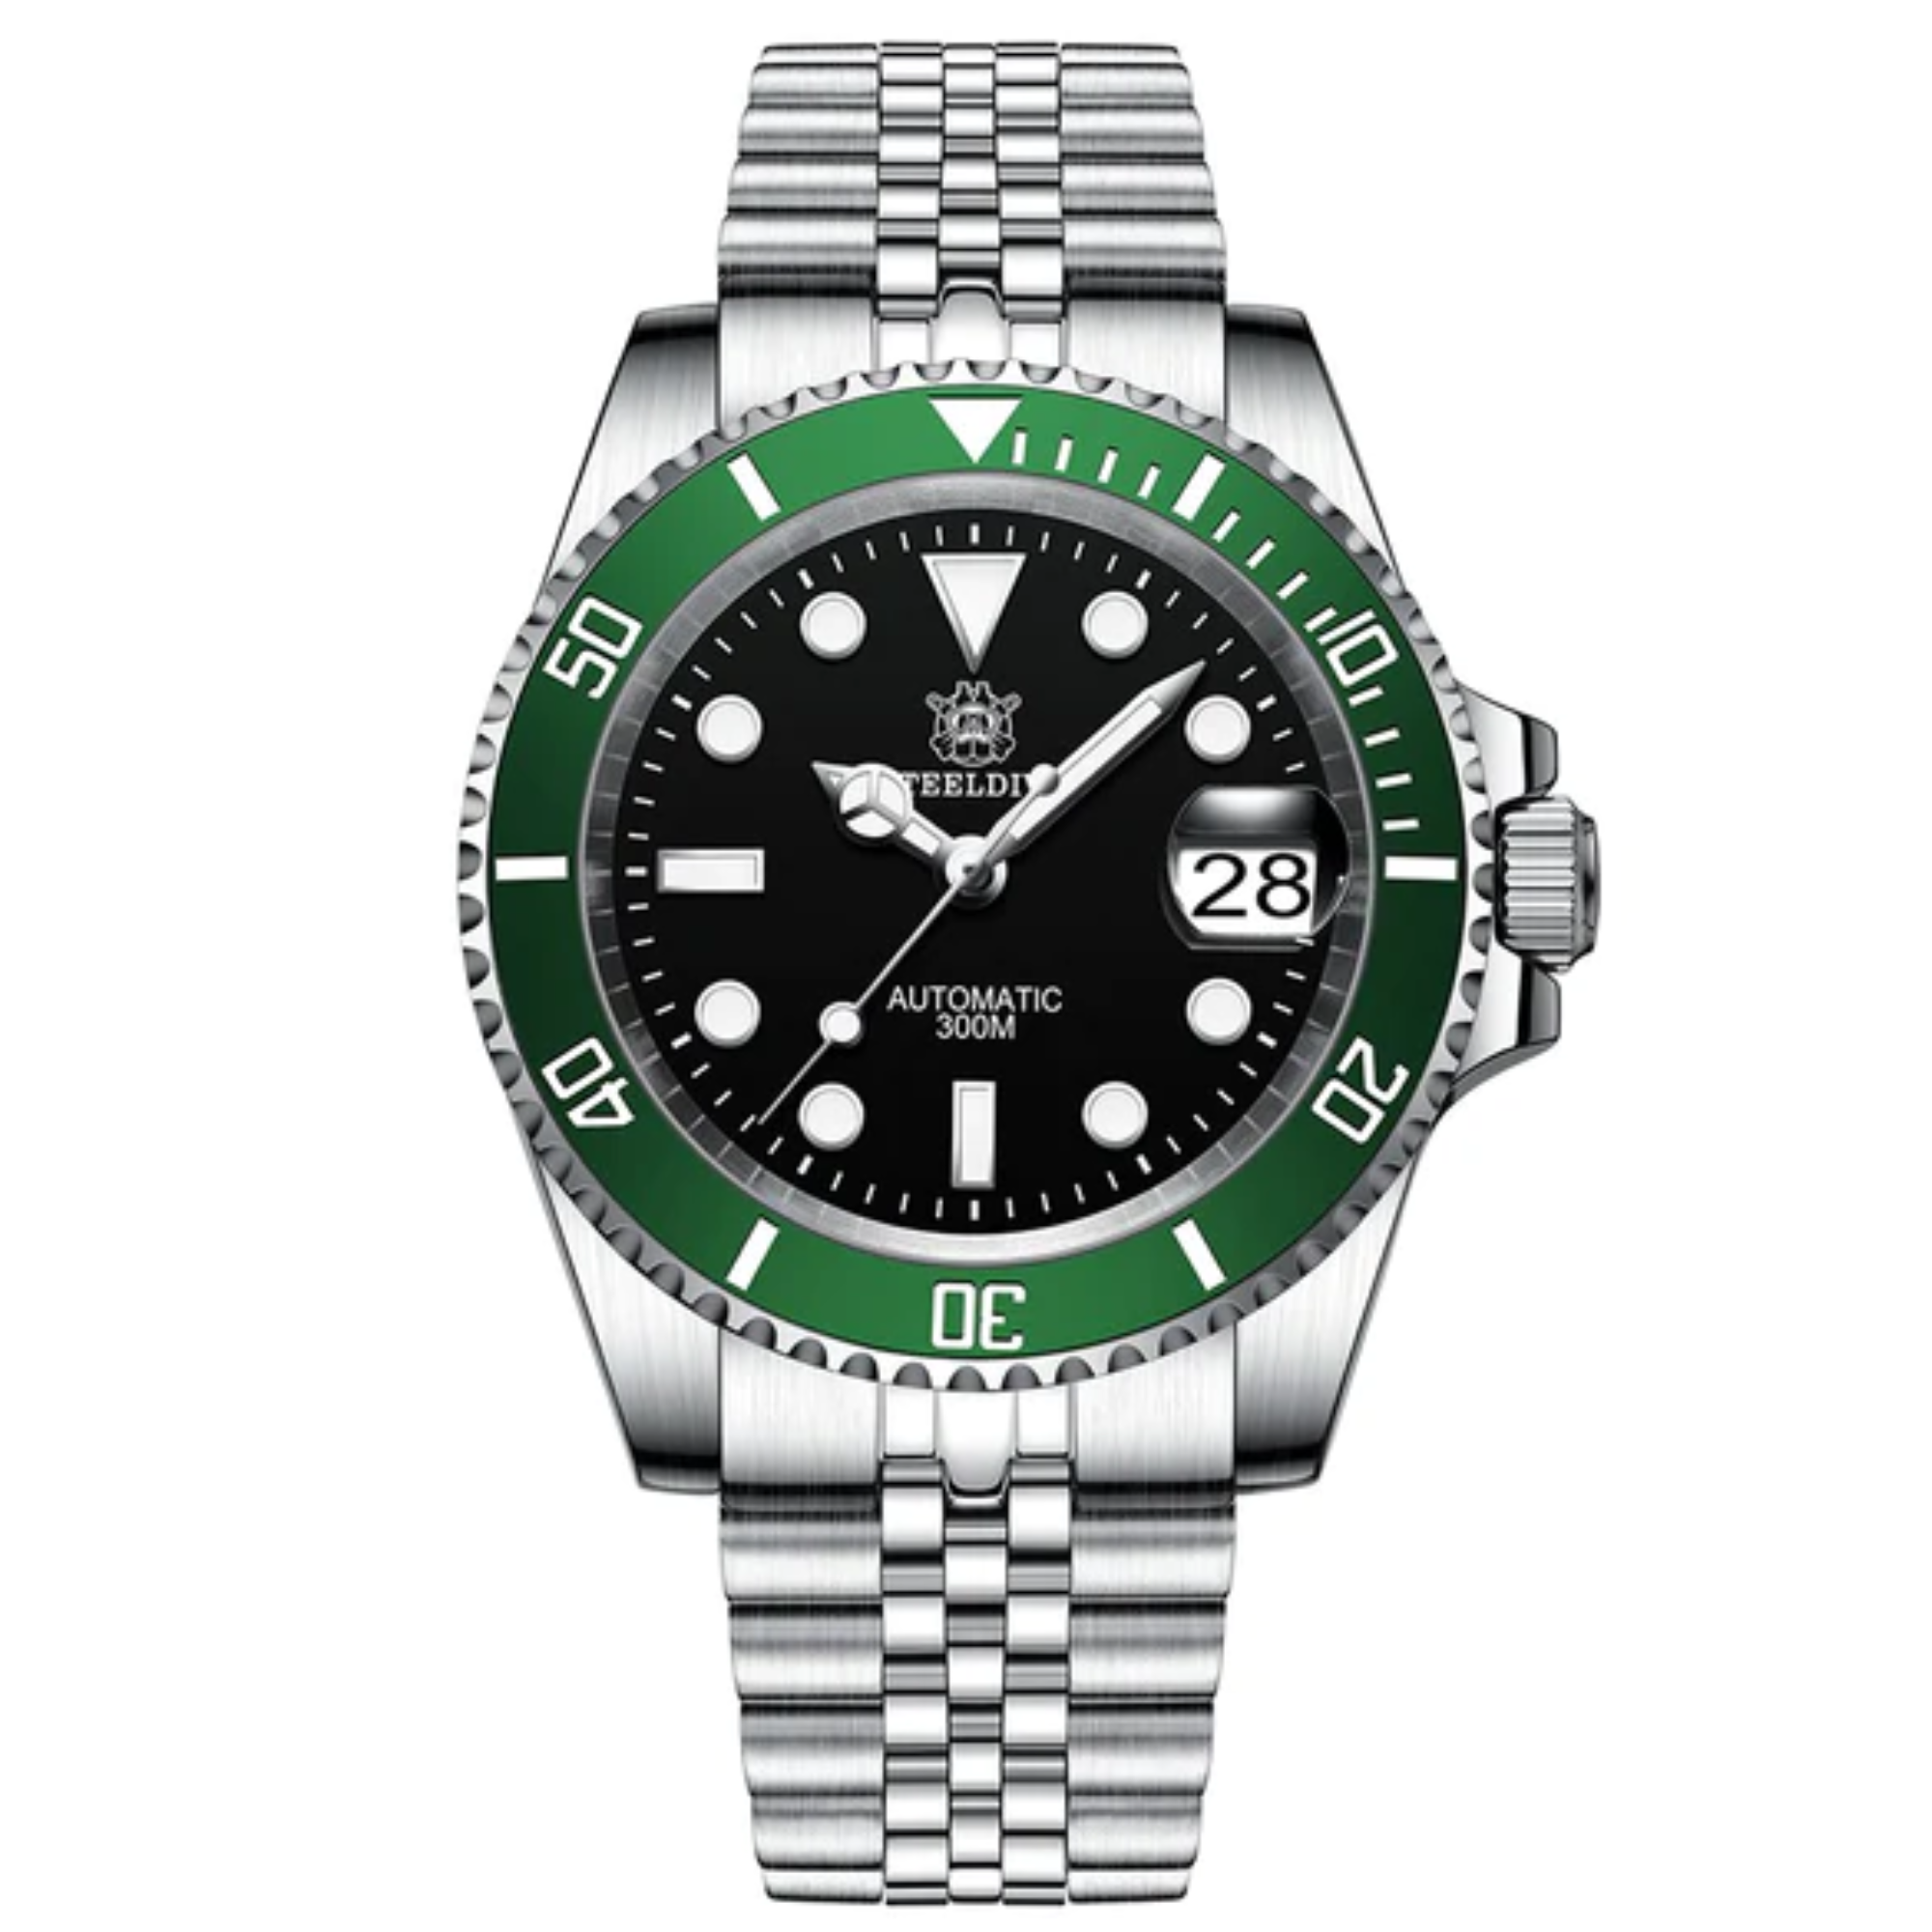 Steeldive SD1953 Sub Men Dive Watch V2 Black/Green Dial With Jubilee Bracelet